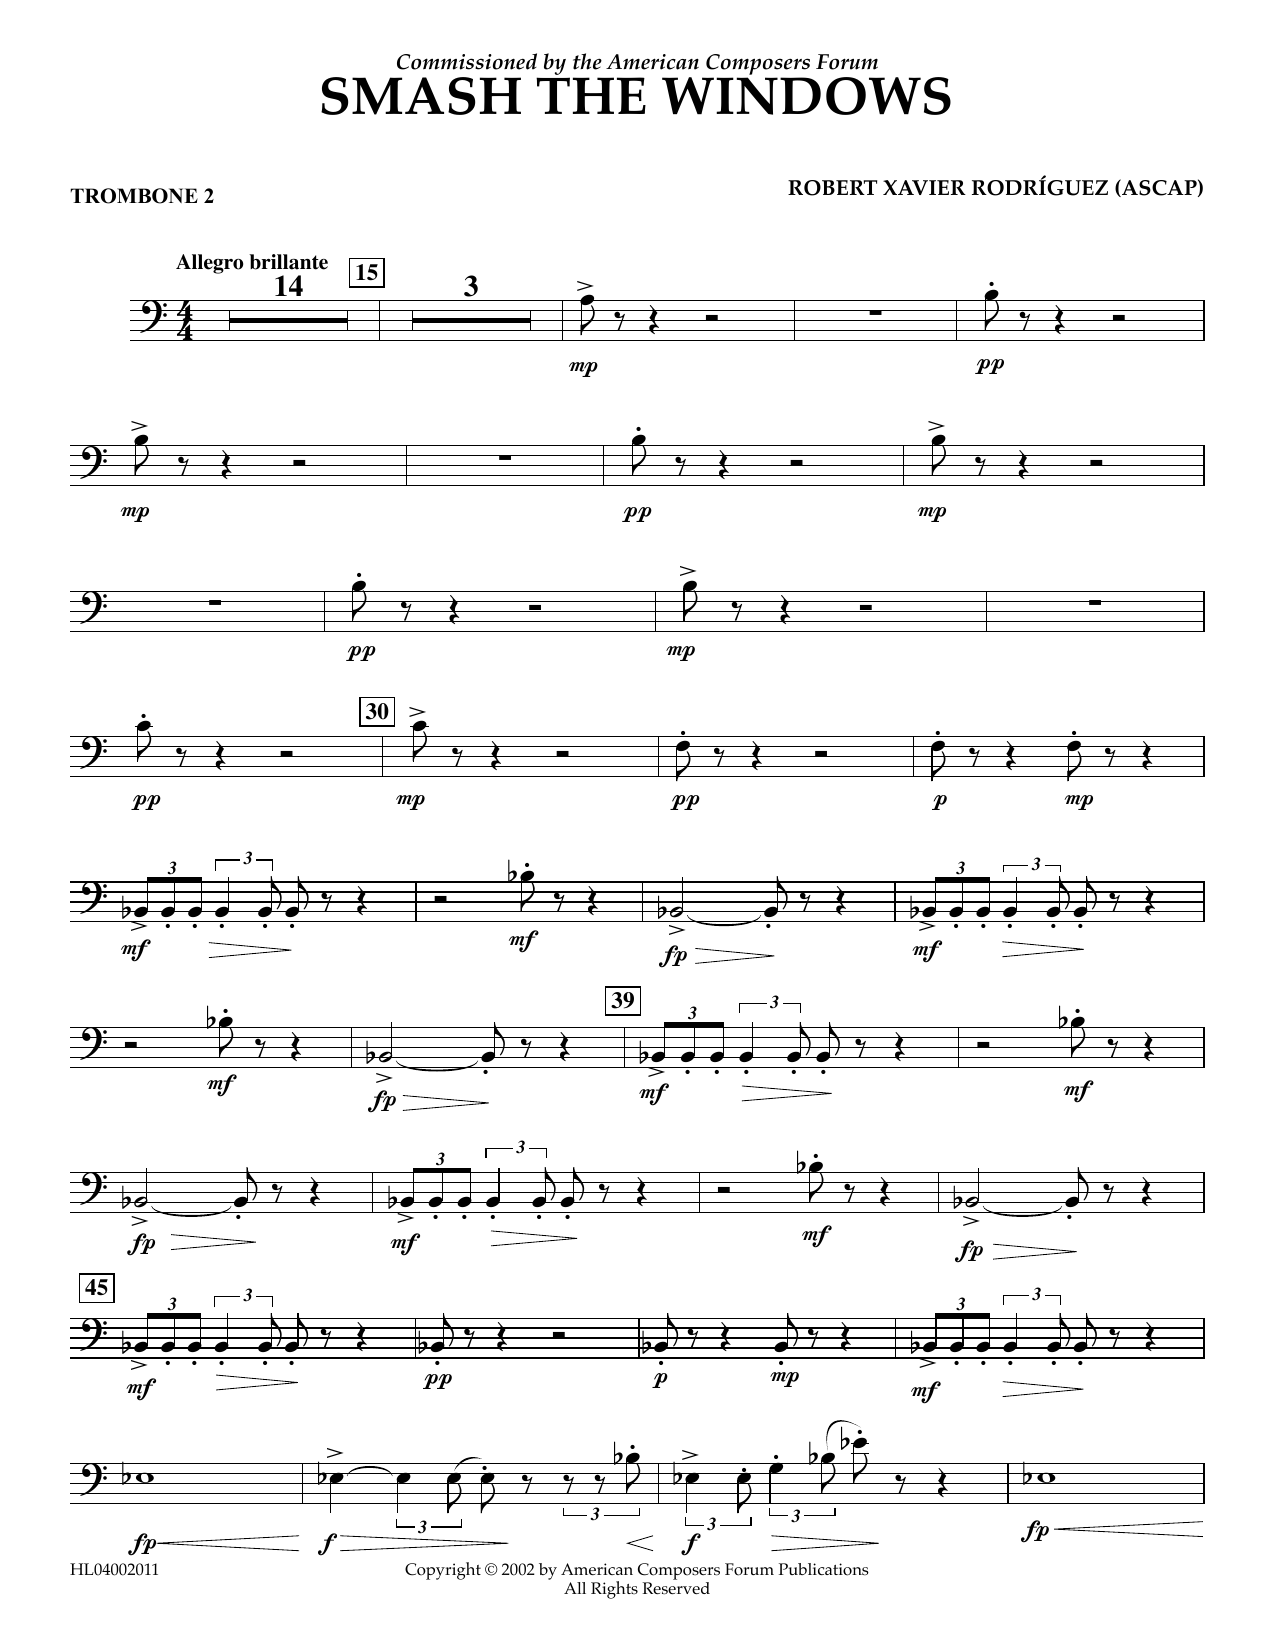 Robert Xavier Rodríguez Smash the Windows - Trombone 2 Sheet Music Notes & Chords for Concert Band - Download or Print PDF